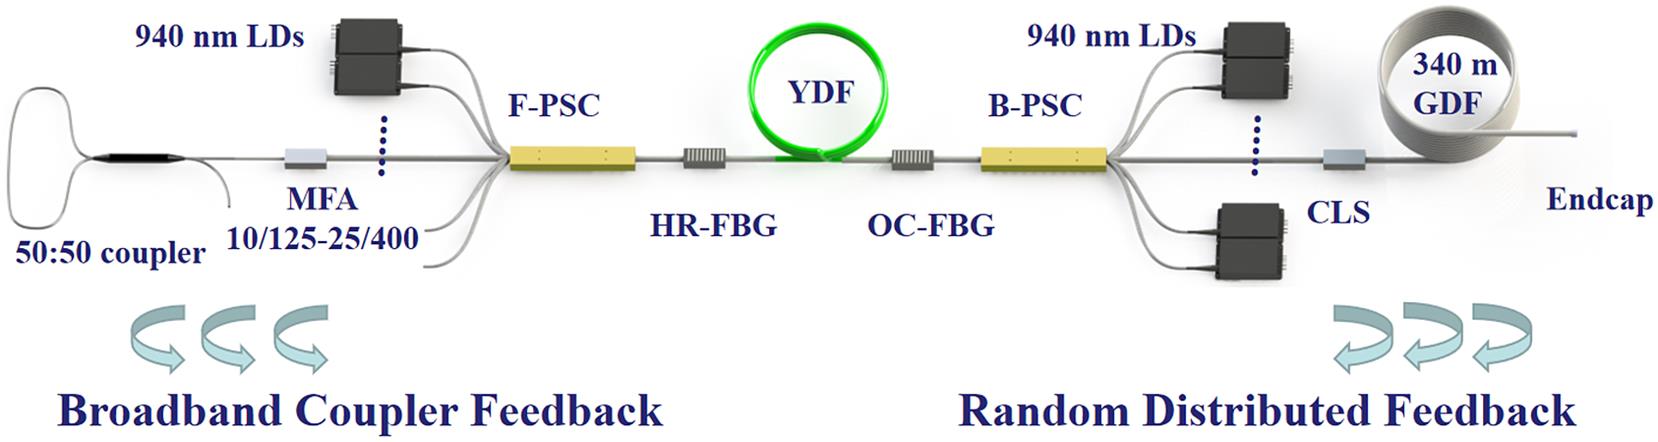 Experimental scheme for kilowatt-level SC generation in a single-stage RFL with a half-open cavity. MFA, mode field adapter; HR-FBG, high-reflectivity fiber Bragg grating; F-PSC, forward pump/signal combiner; YDF, ytterbium-doped fiber; OC-FBG, output coupler fiber Bragg grating; B-PSC, backward pump/signal combiner; LD, laser diode; CLS, cladding light stripper; GDF, germanium-doped fiber.